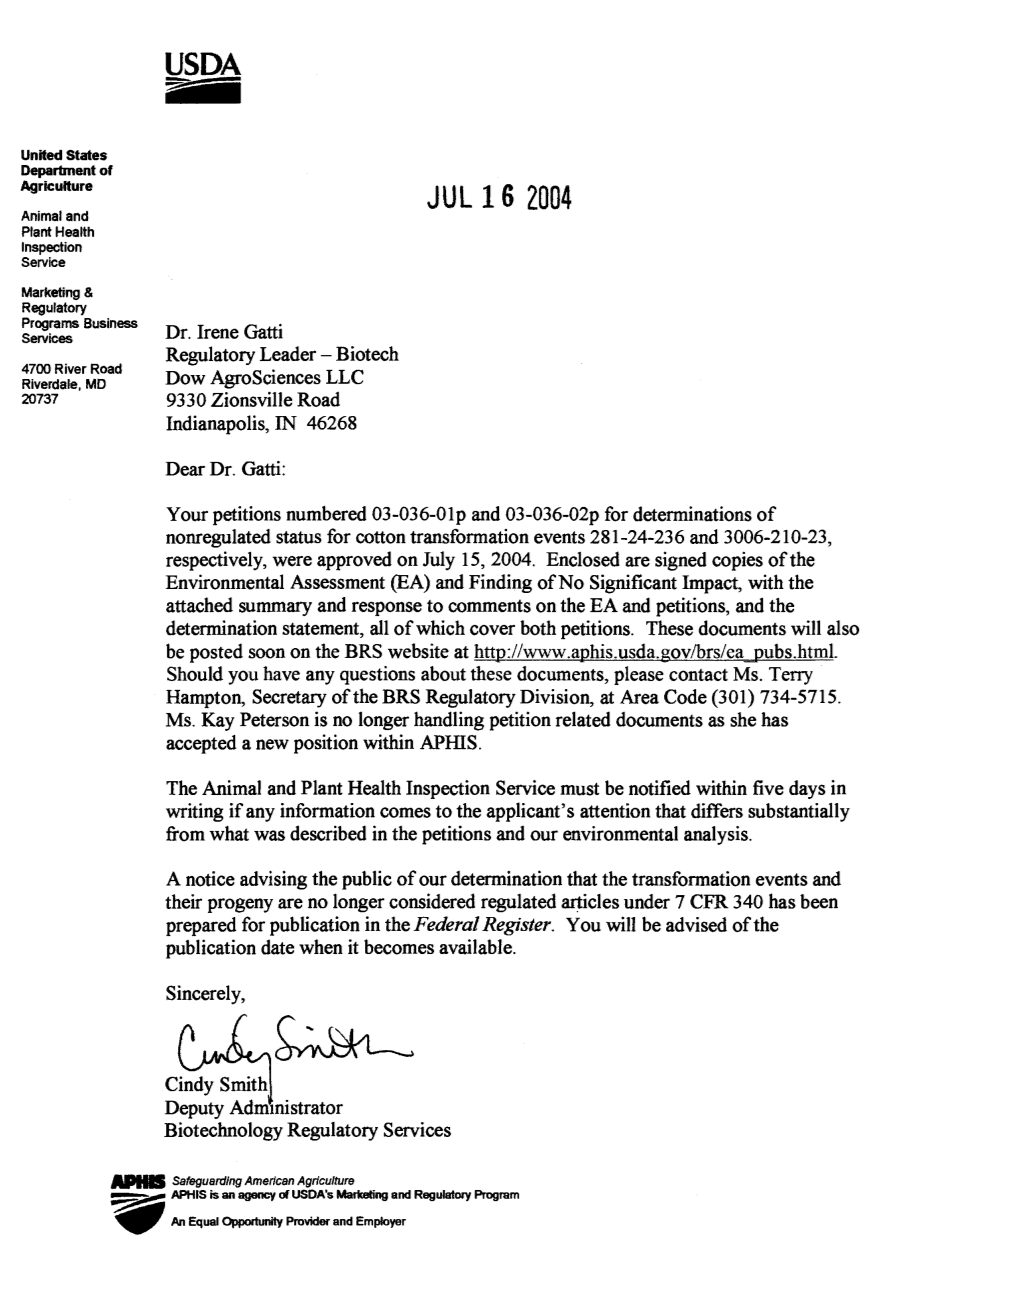 USDA-APHIS Decision on Monsanto Company Petition 00-342-01